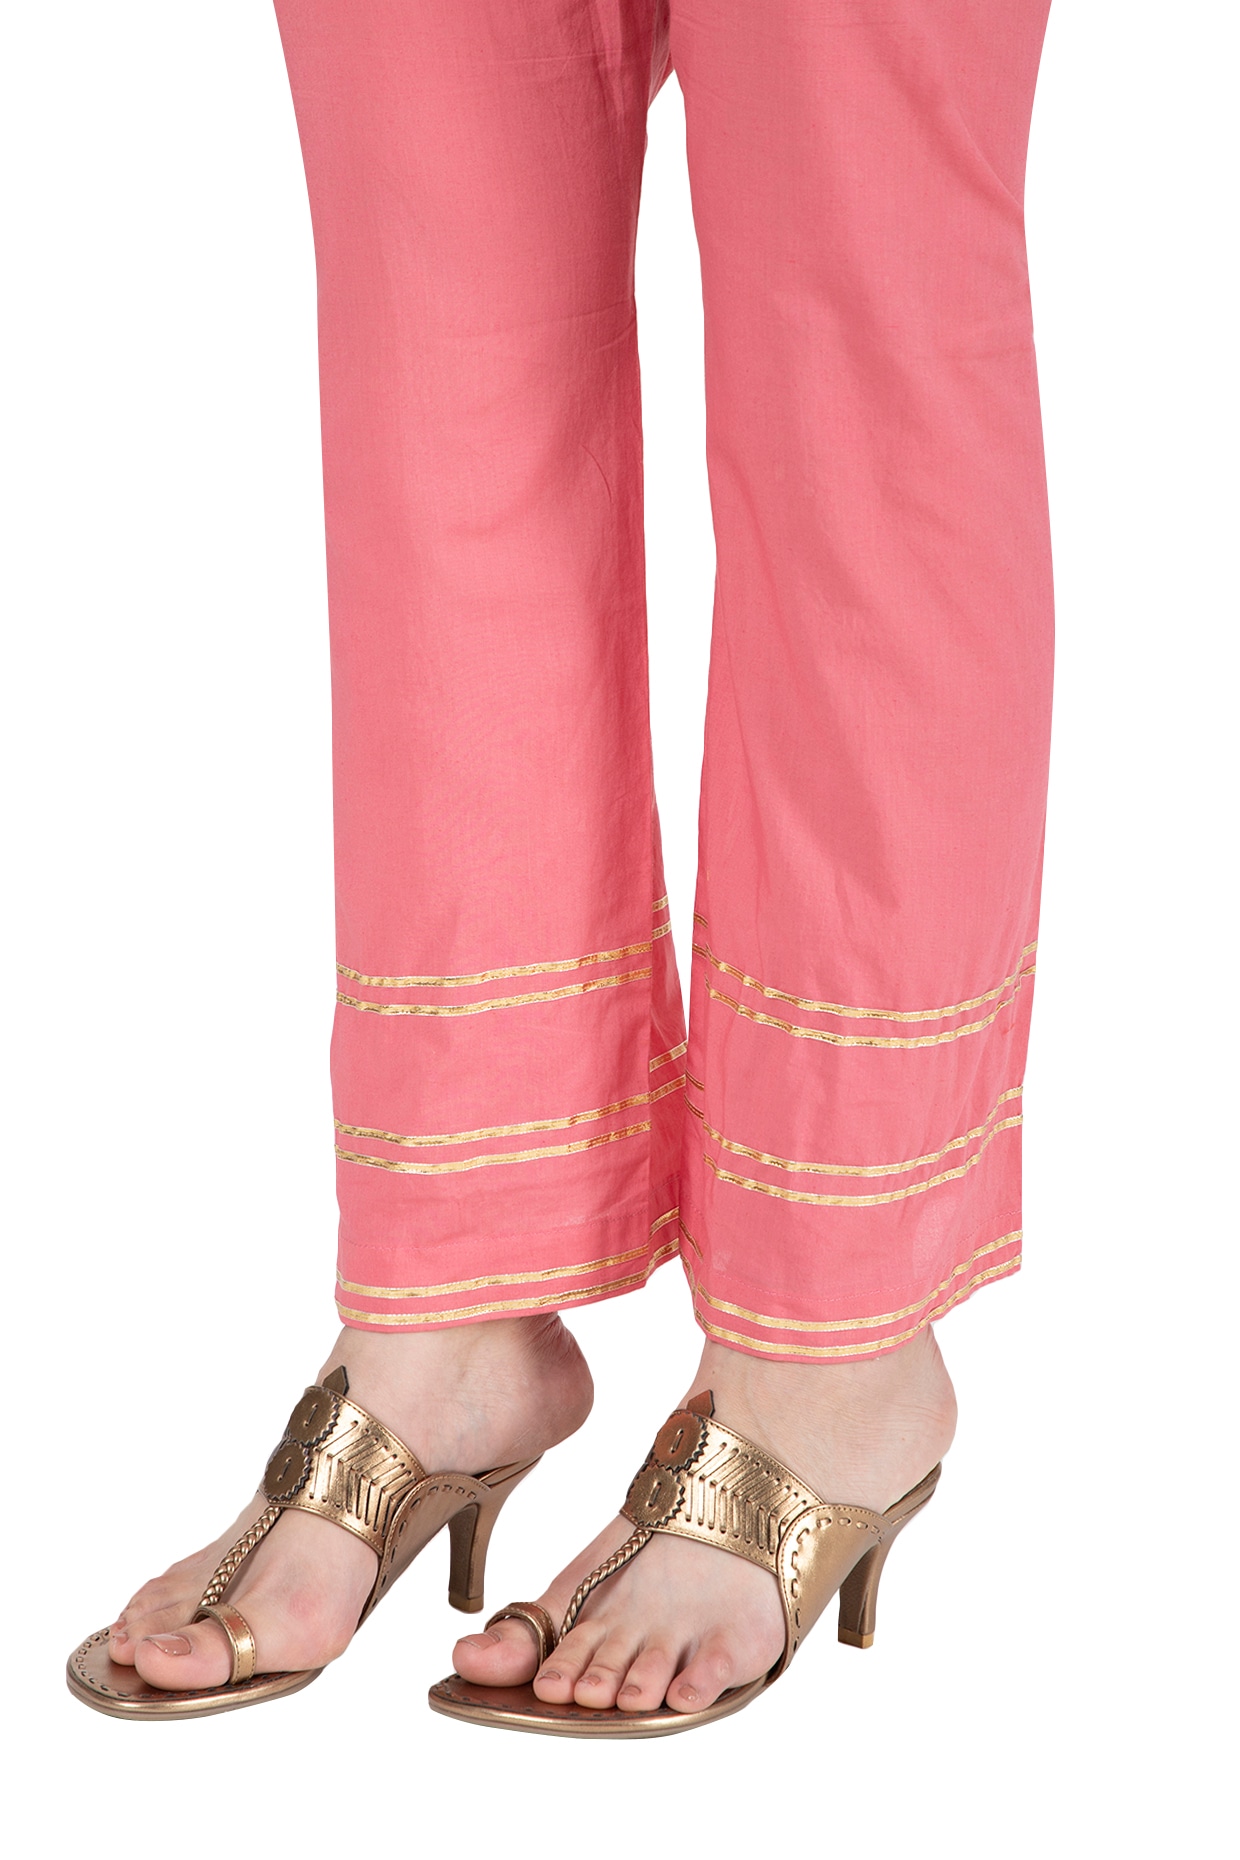 pink pencil heels